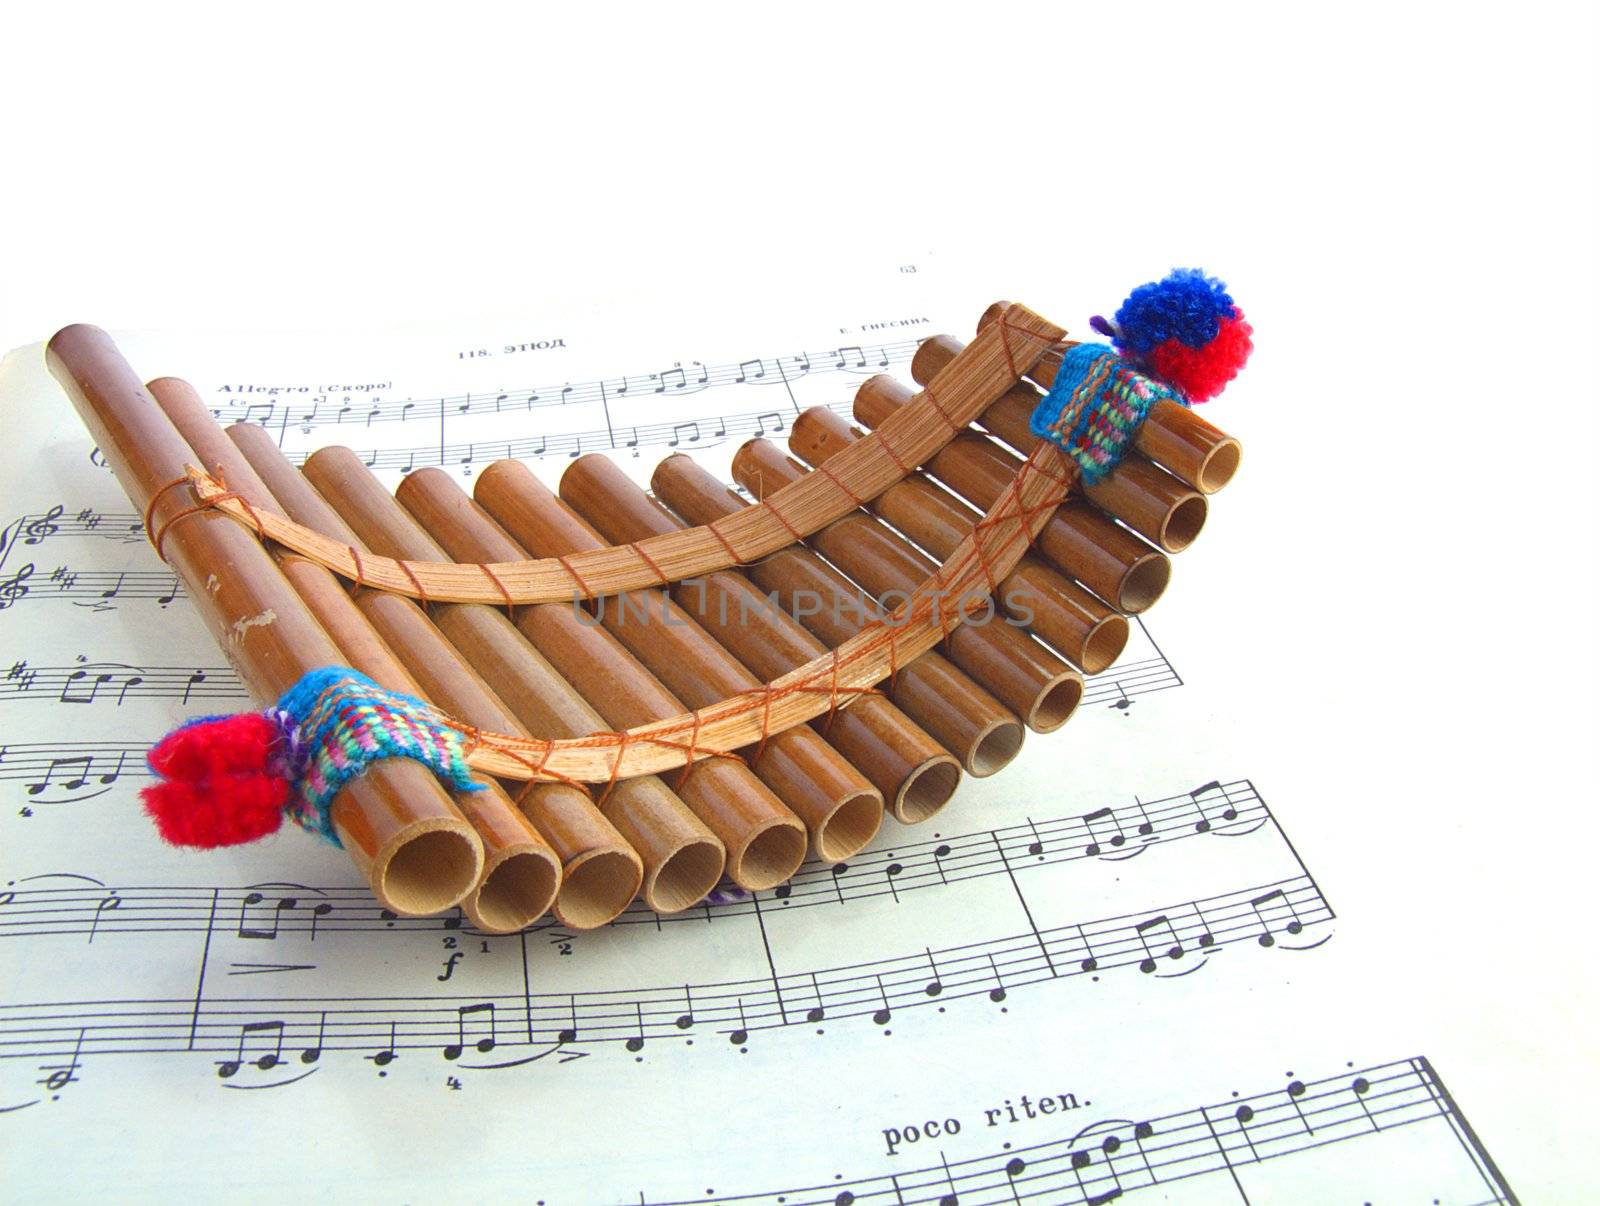 National musical instrument of South America aboriginal